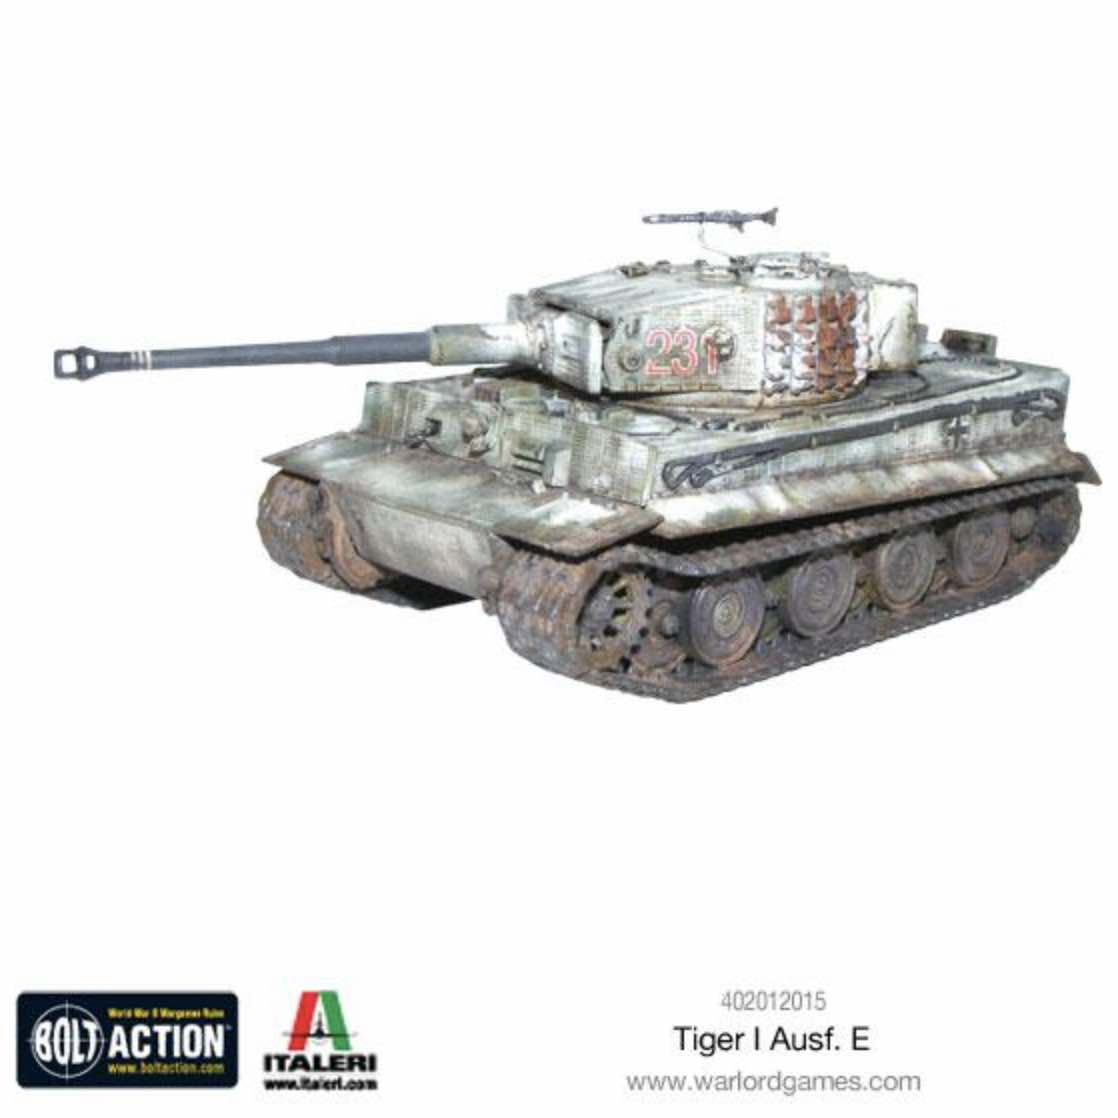 402012015 tiger I ausf E modelo_2